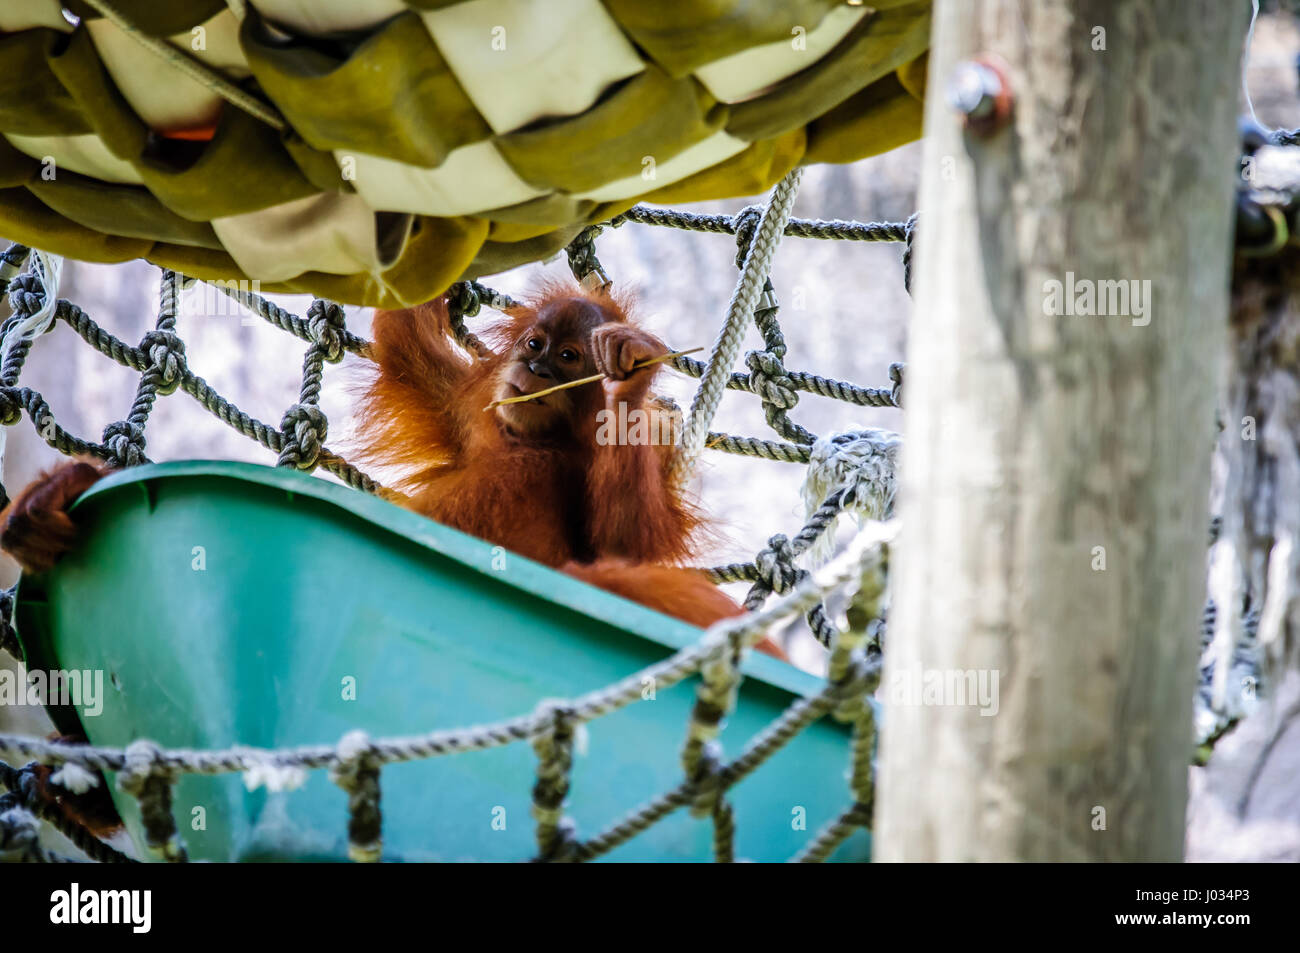 Cute baby orangutan in captivity in a zoo Stock Photo